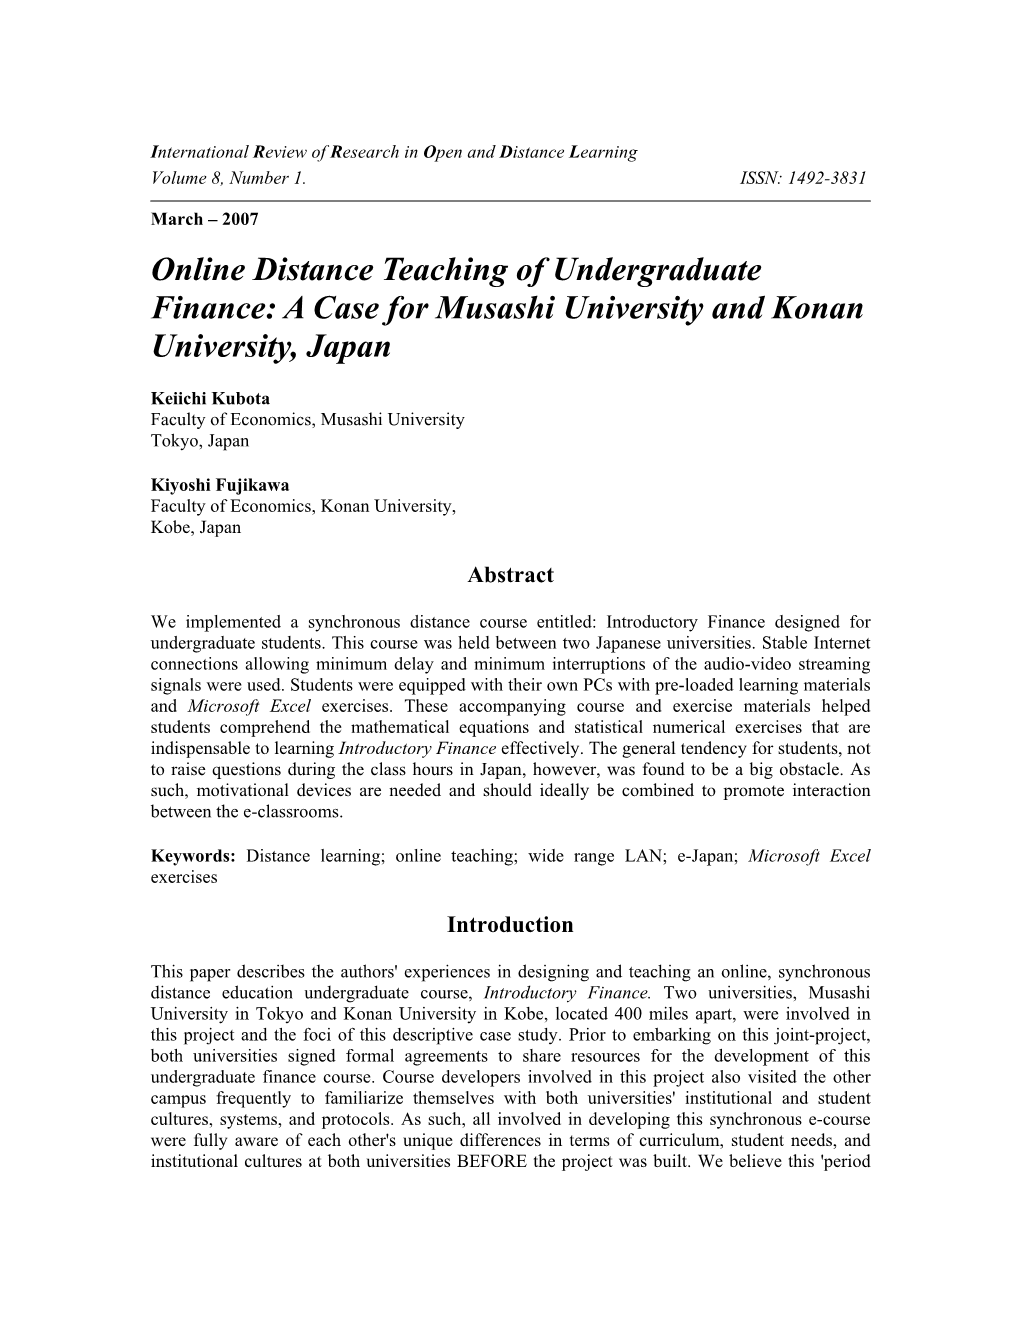 Online Distance Teaching of Undergraduate Finance: a Case for Musashi University and Konan University, Japan